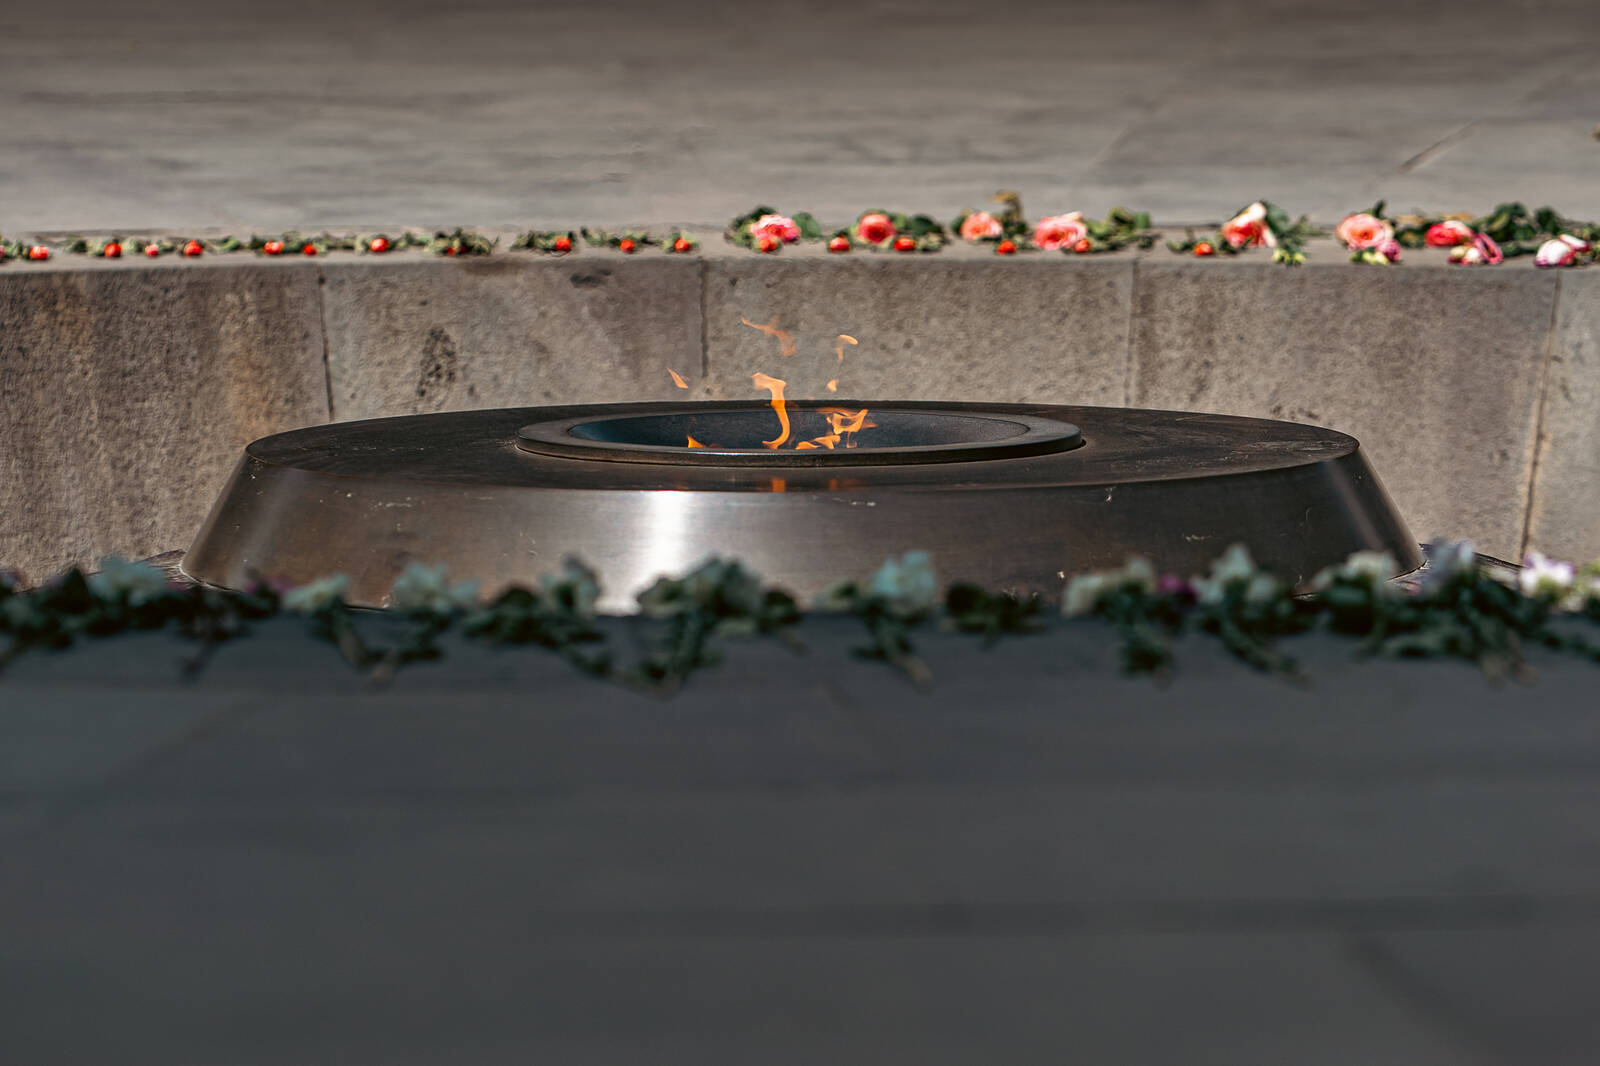 Image of Armenian Genocide Memorial by James Billings.